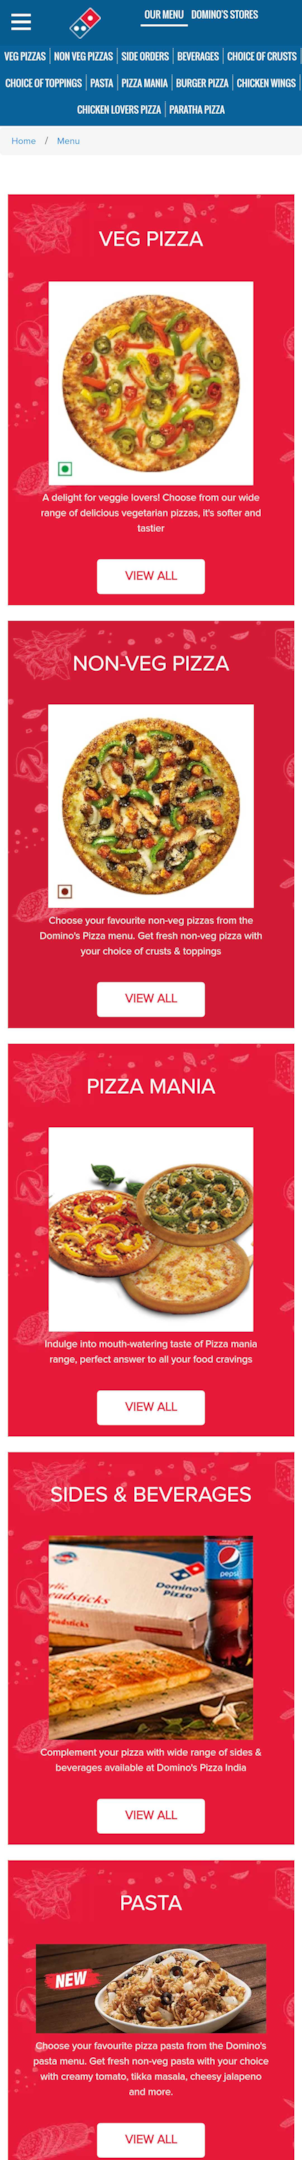 strategic case analysis of domino's pizza